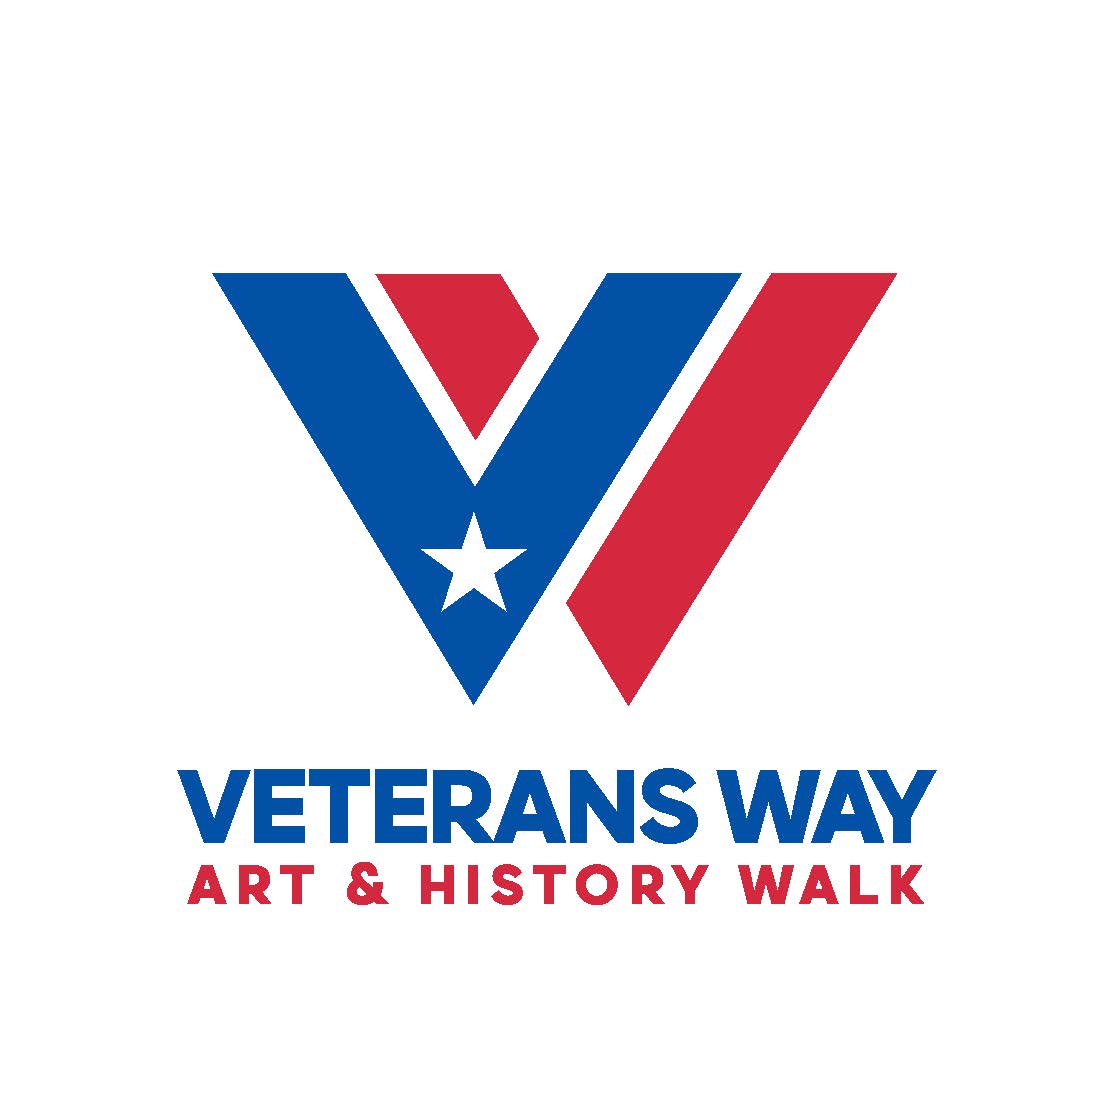 Veterans Way art and history walk